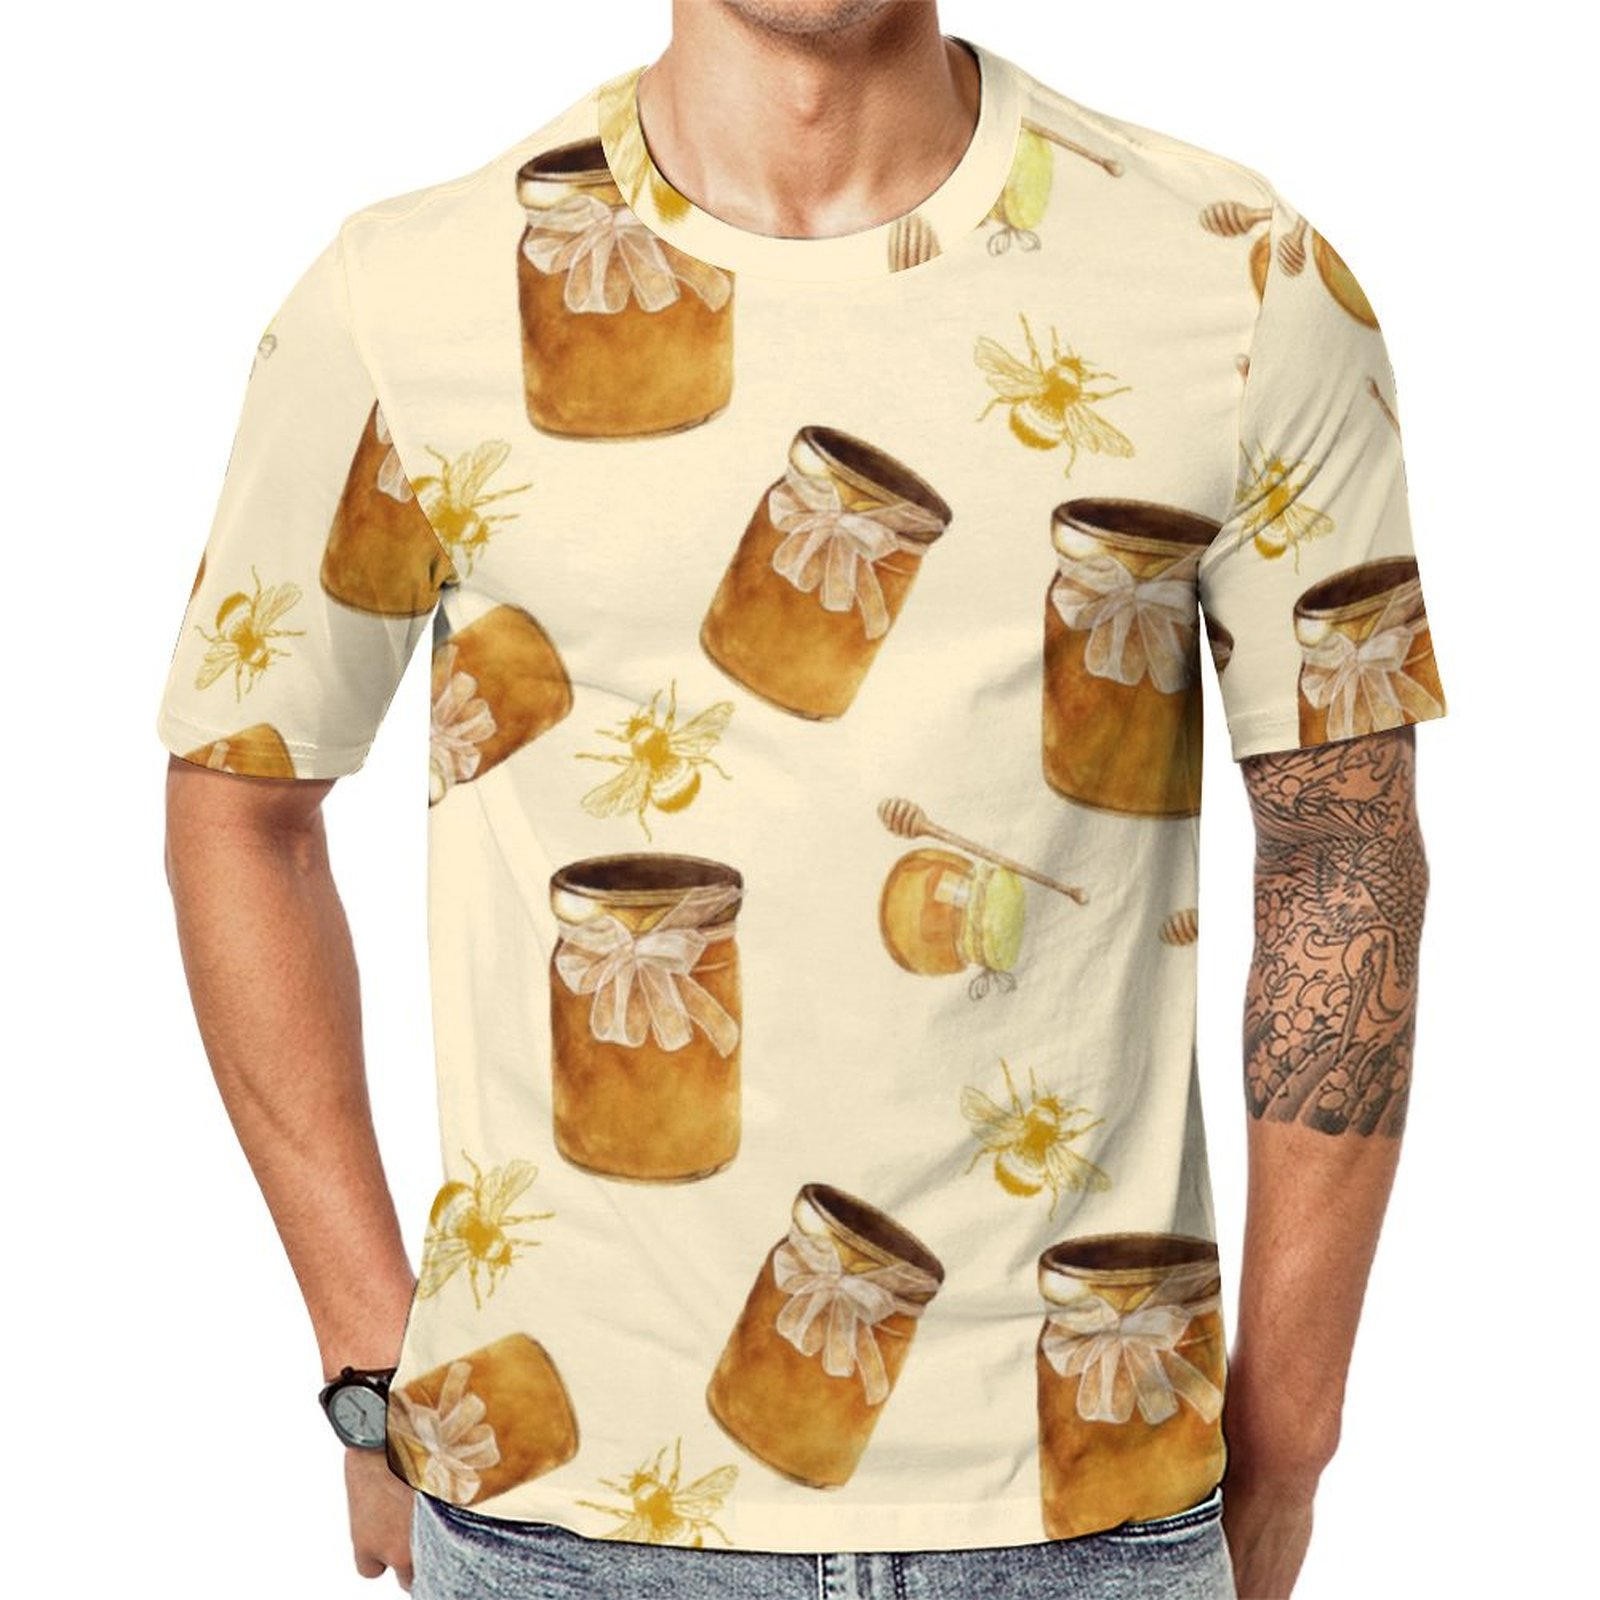 Honey Jars Bees Short Sleeve Print Unisex Tshirt Summer Casual Tees for Men and Women Coolcoshirts